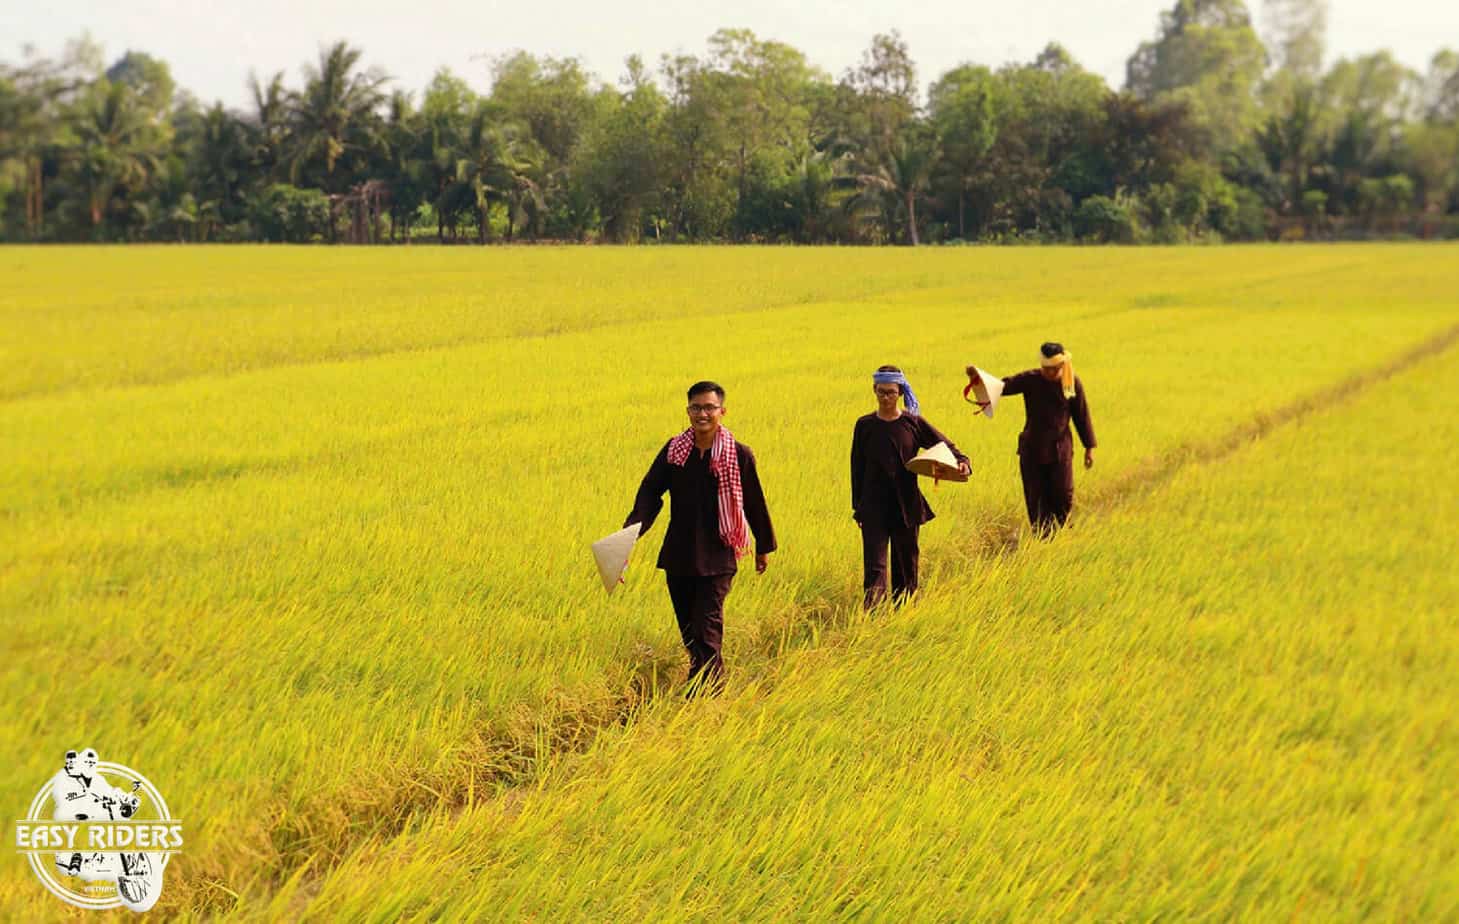 Mekong Delta's rice fields